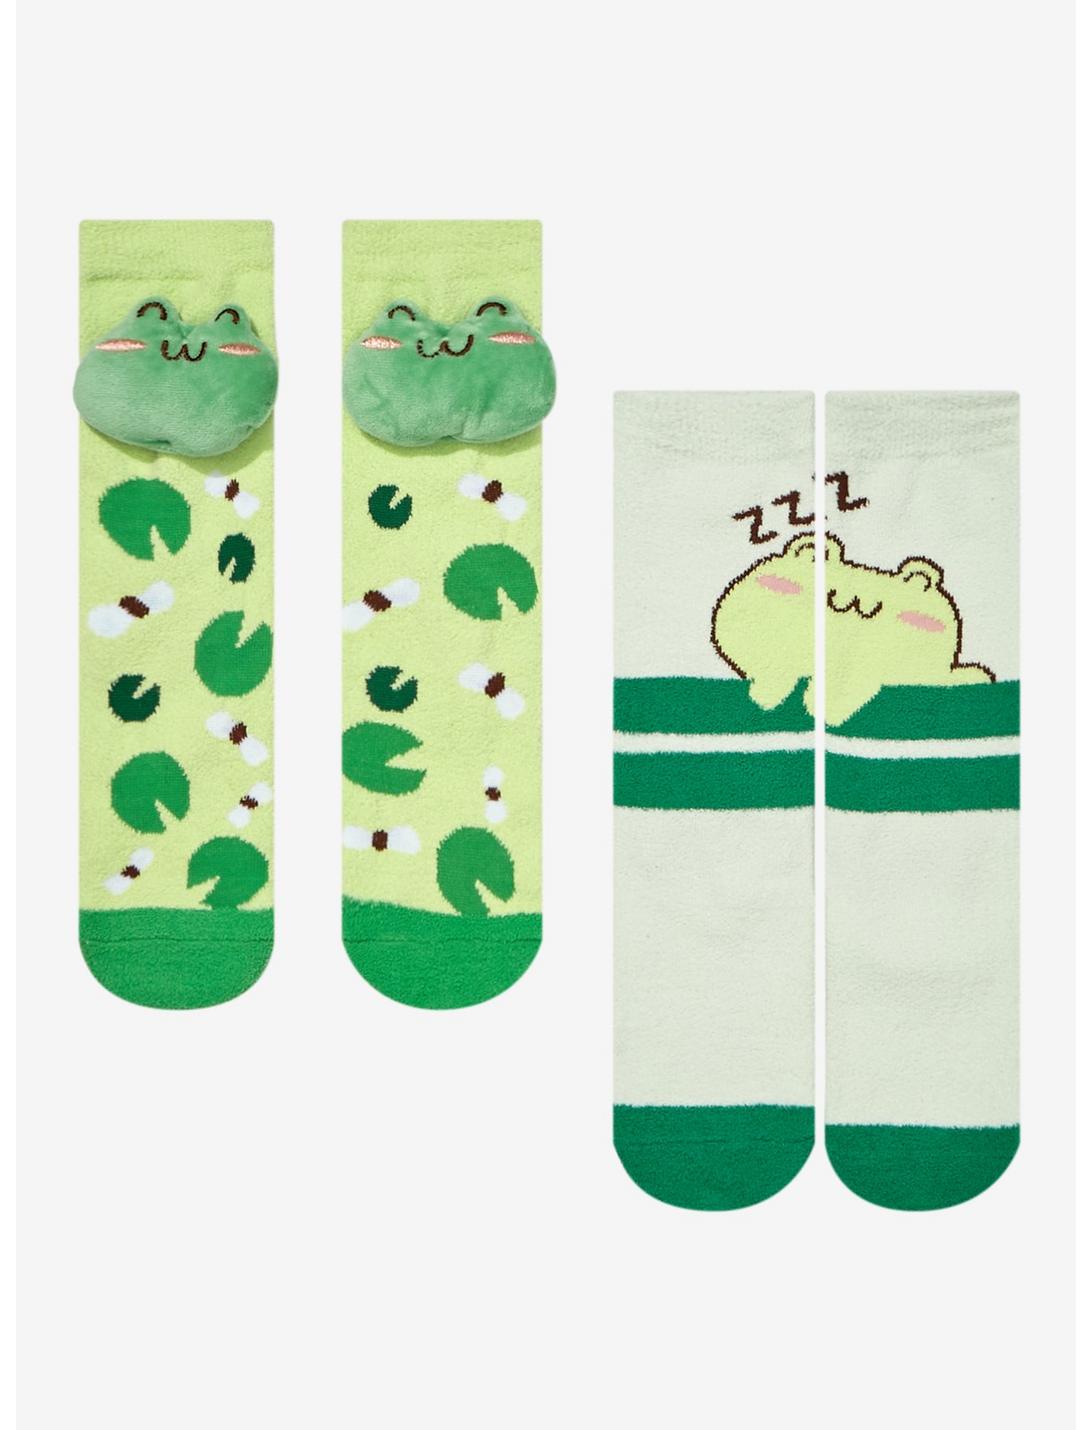 Chibi Frog Plush Fuzzy Socks 2 Pair, , hi-res